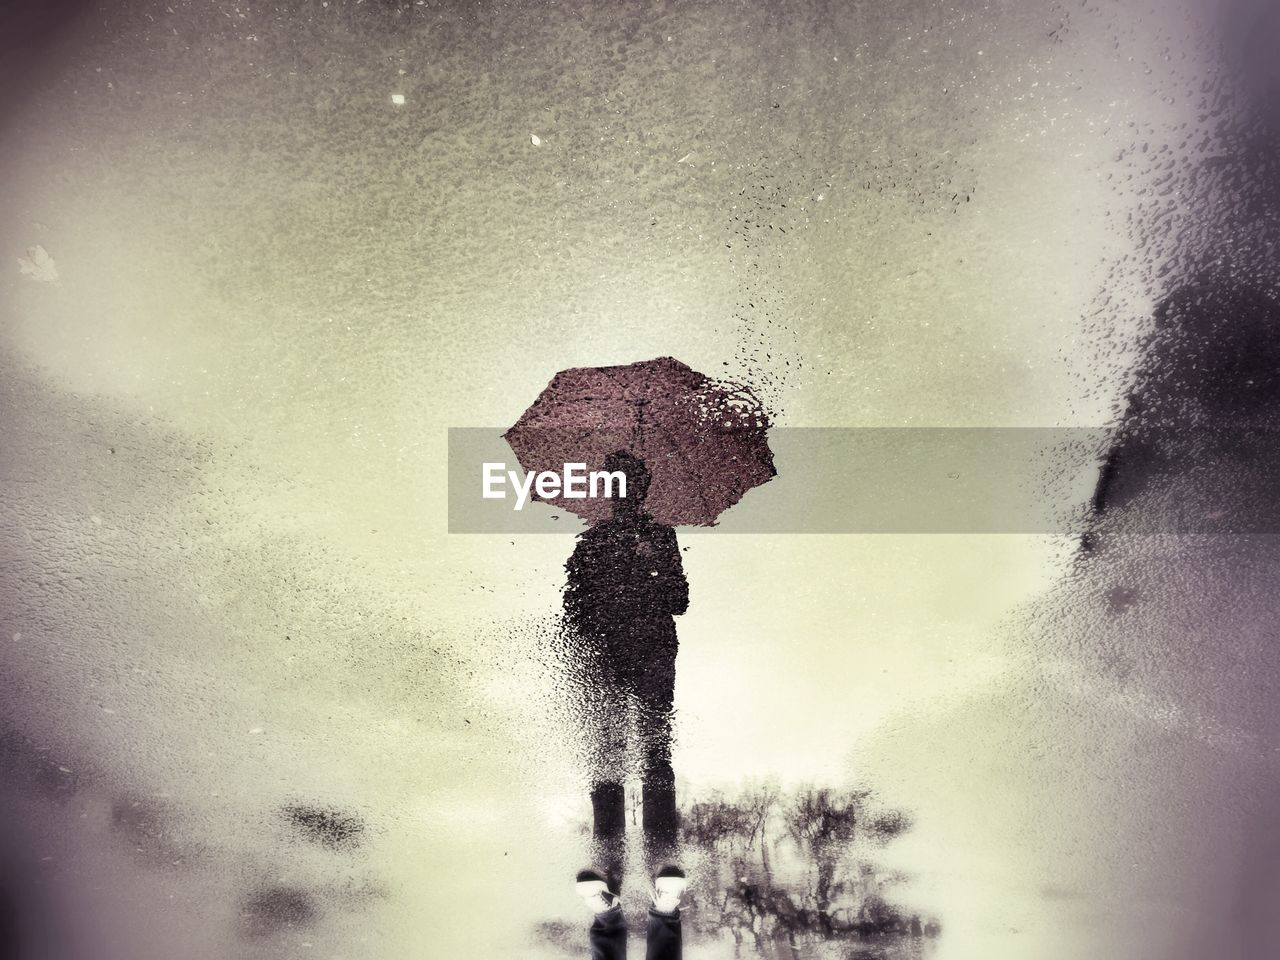 Reflection of man holding umbrella on street